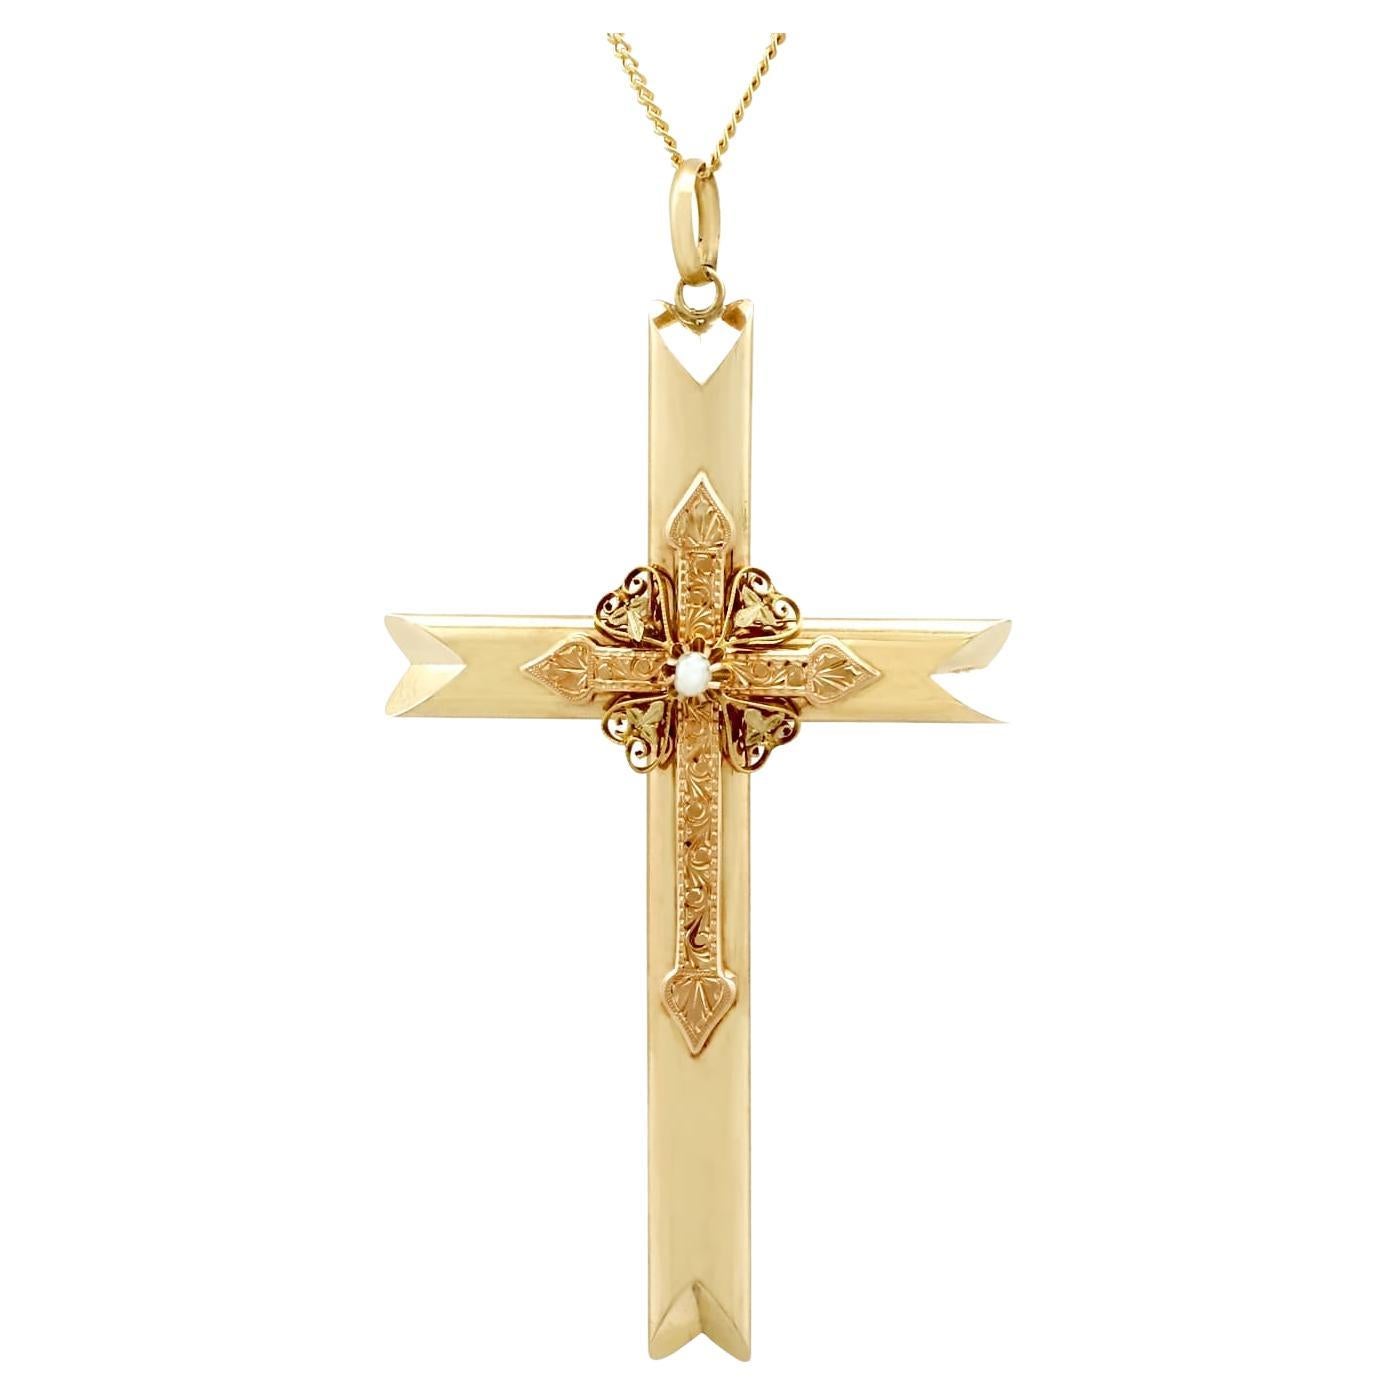 Pendentif croix victorien ancien en or jaune 14 carats et perles naturelles